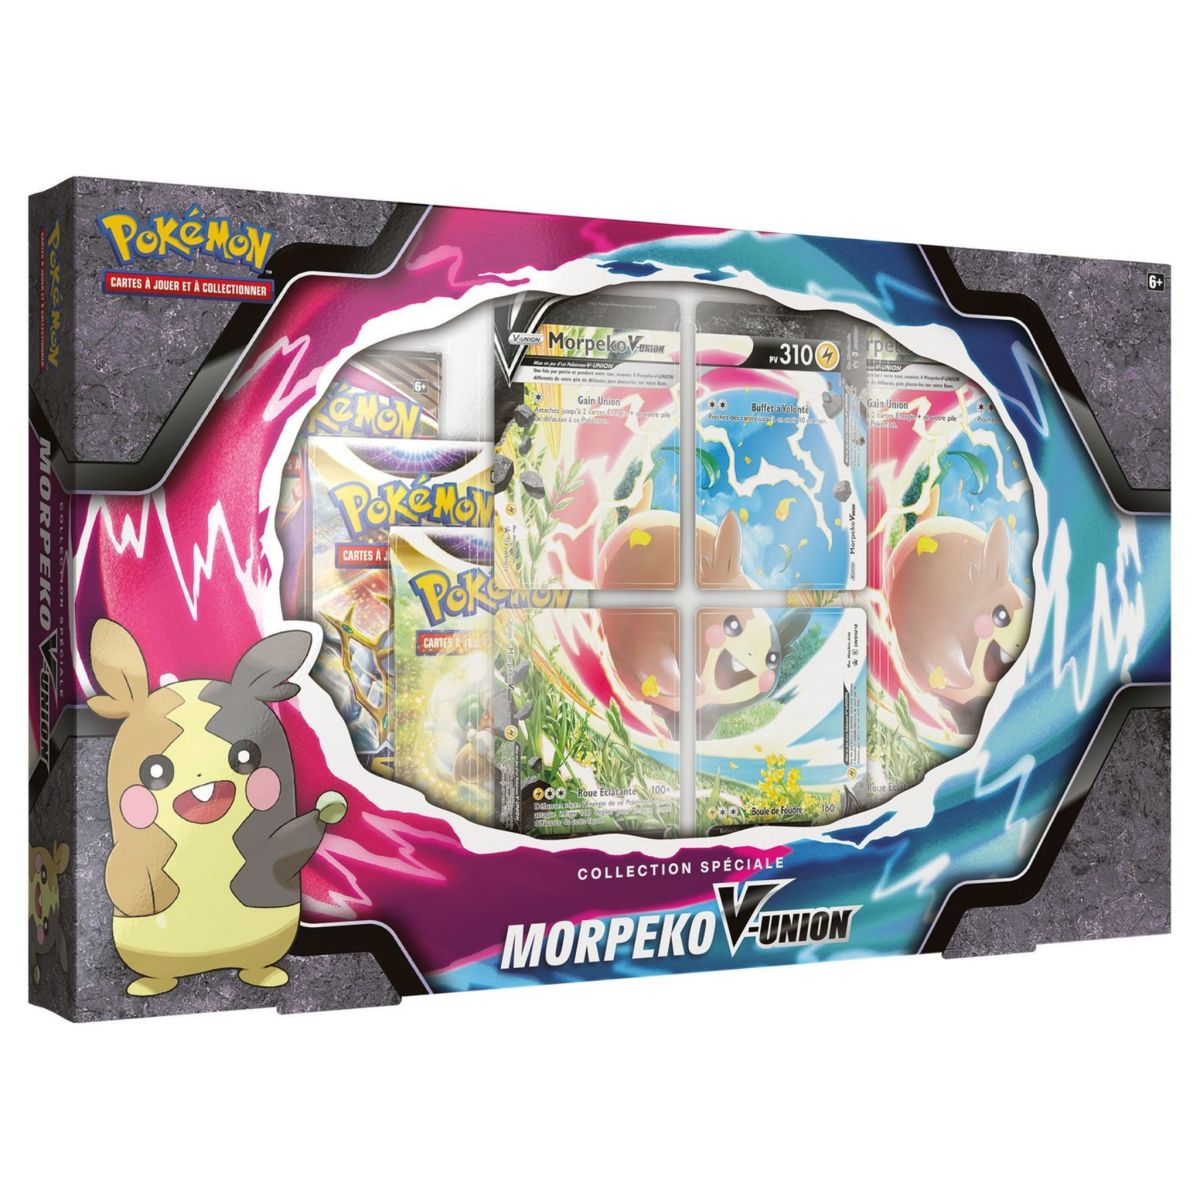 Pokémon - Coffret Collection Special - Morpeko V-Union - FR